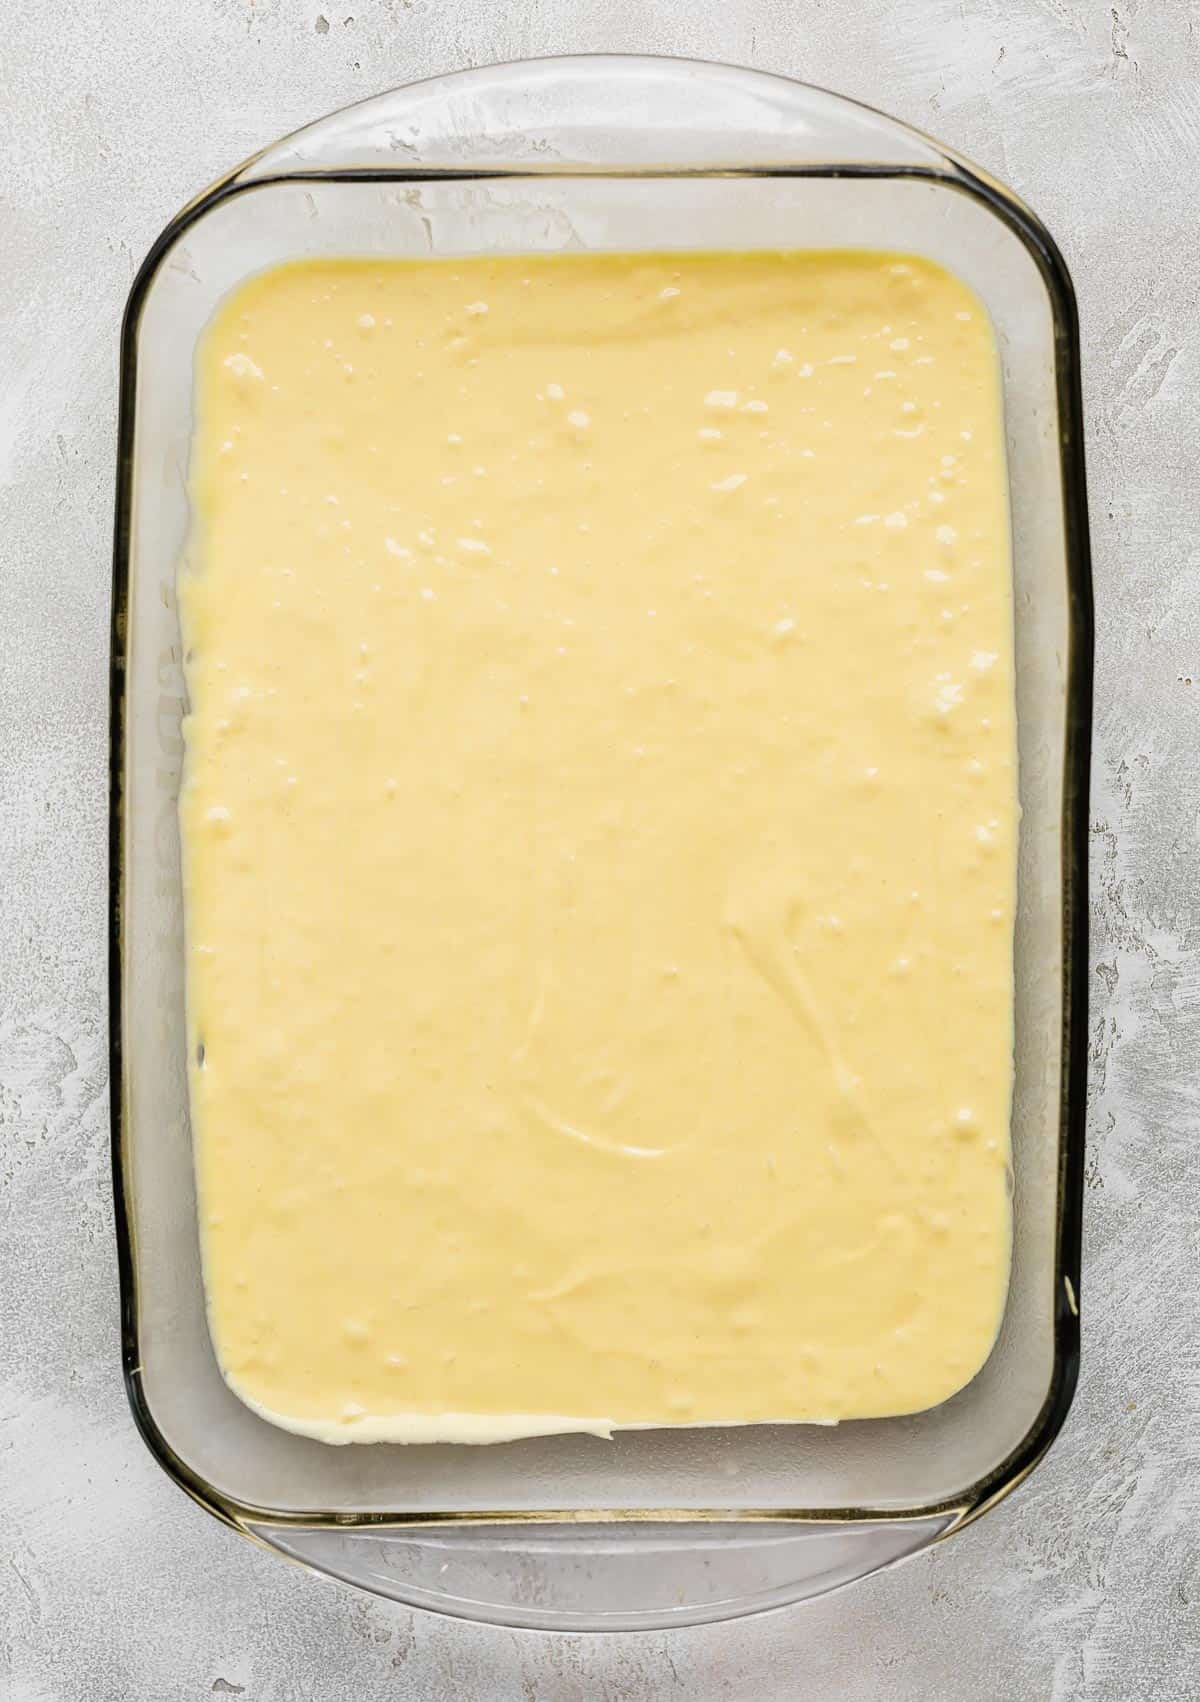 Lemon cake batter in a rectangular glass baking dish.